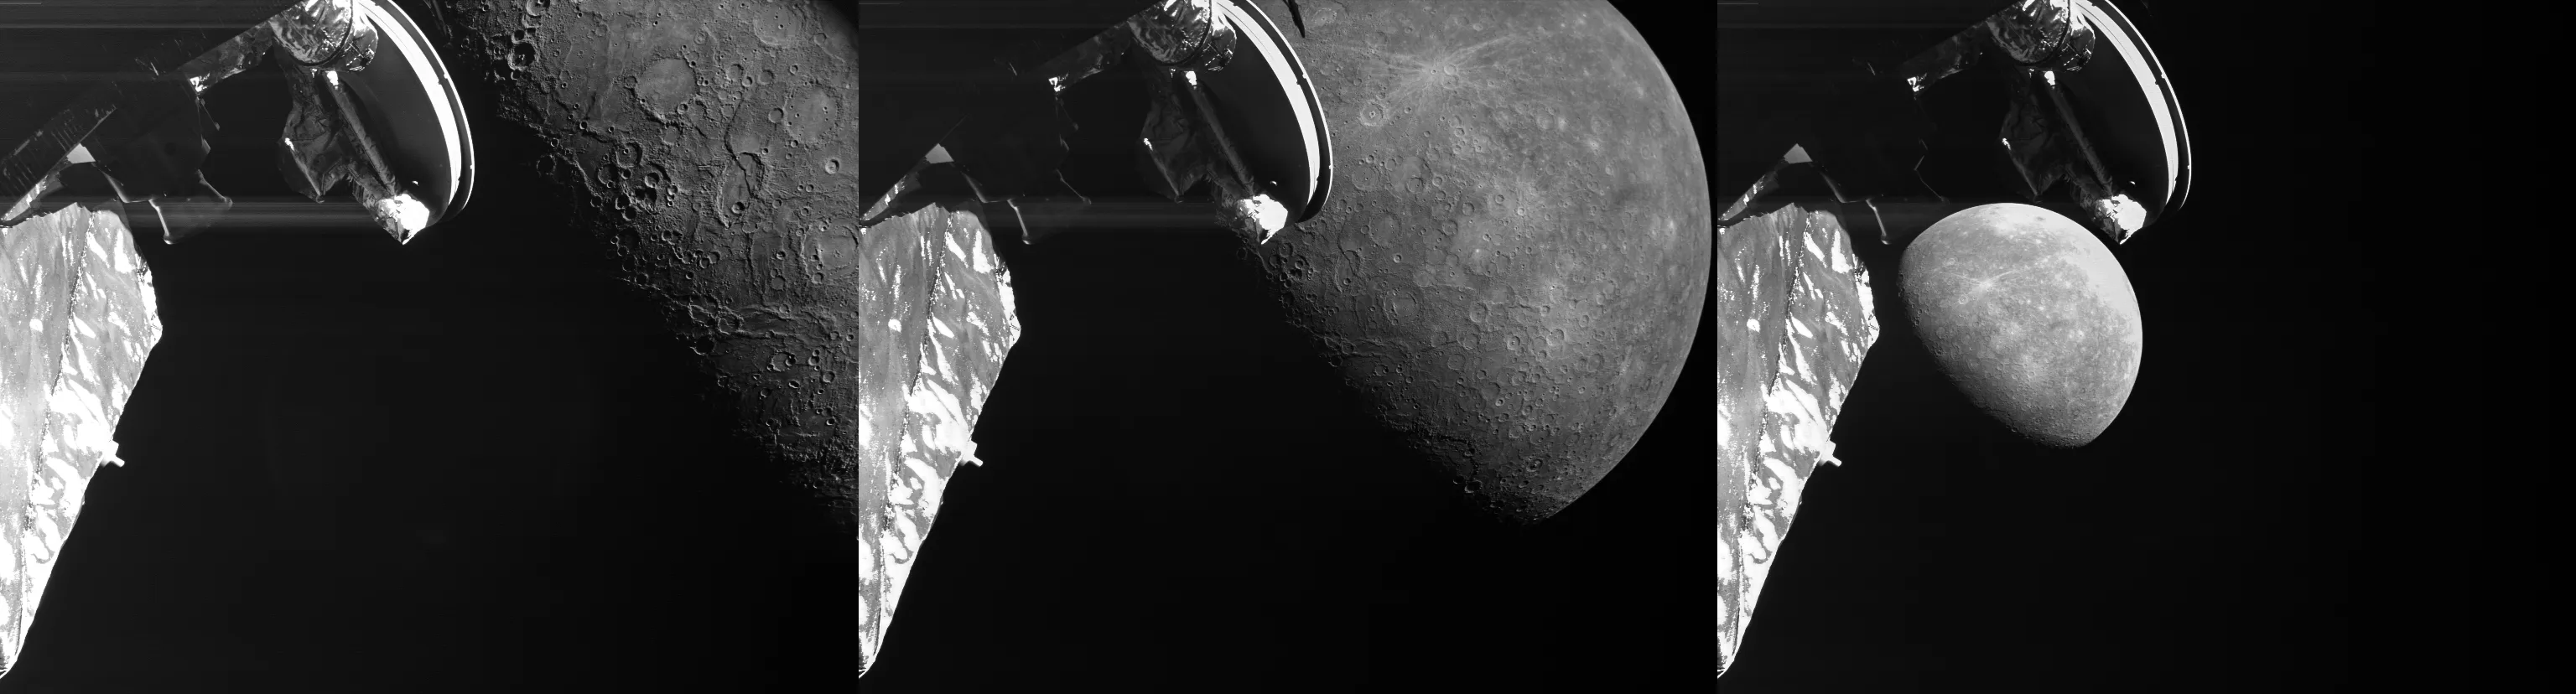 Коллаж из фотографий Меркурия